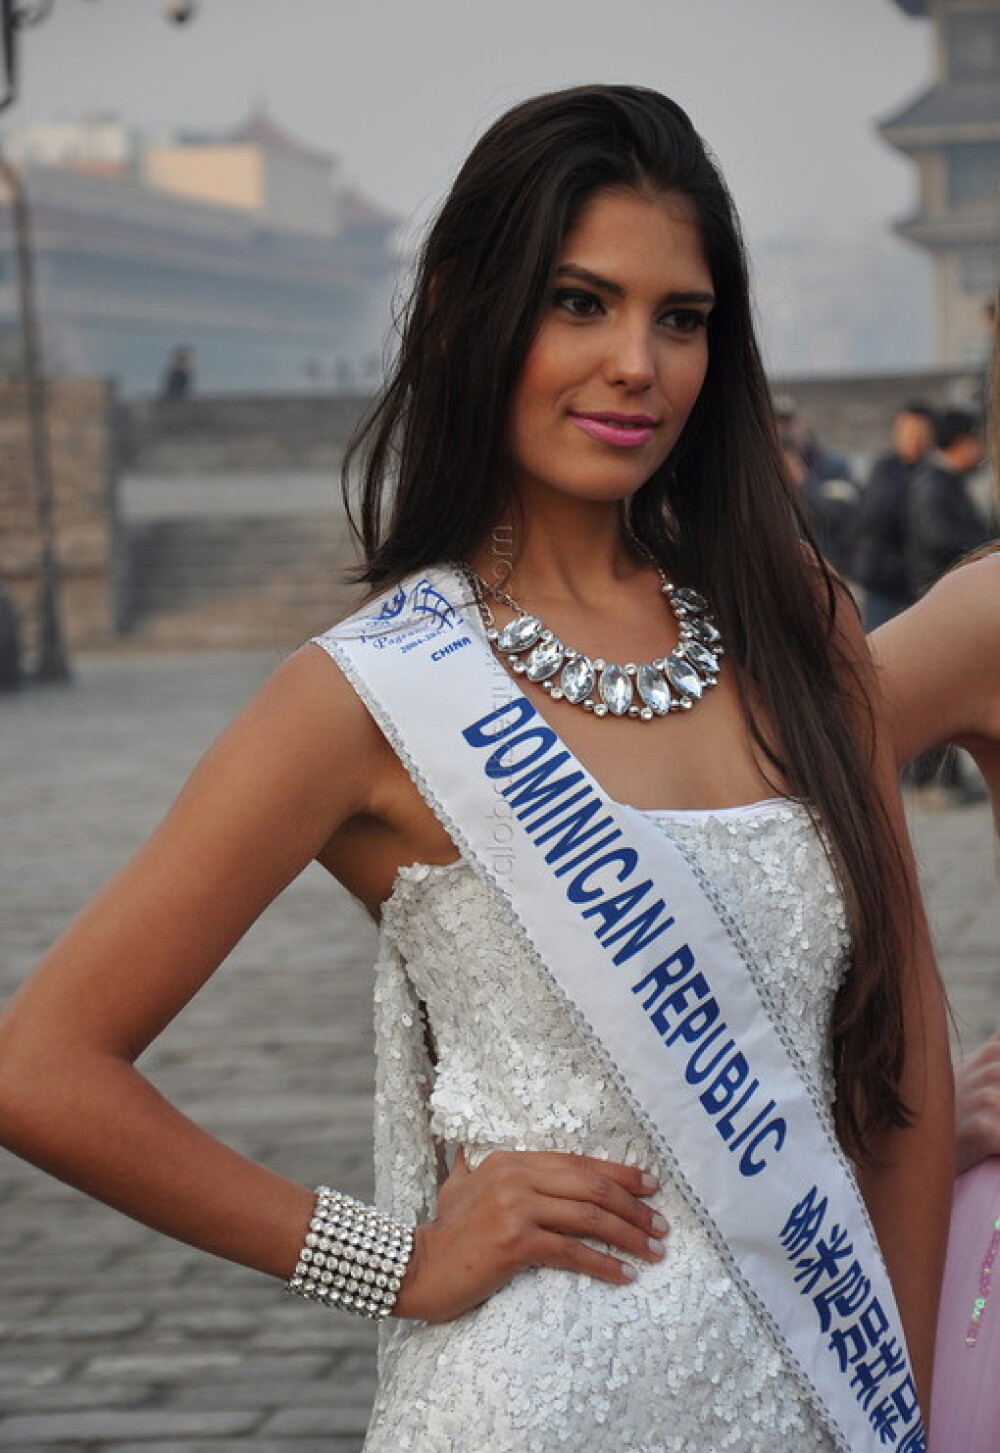 A fost aleasa Miss Republica Dominicana. A pierdut coroana din cauza unei minciuni banale - Imaginea 2